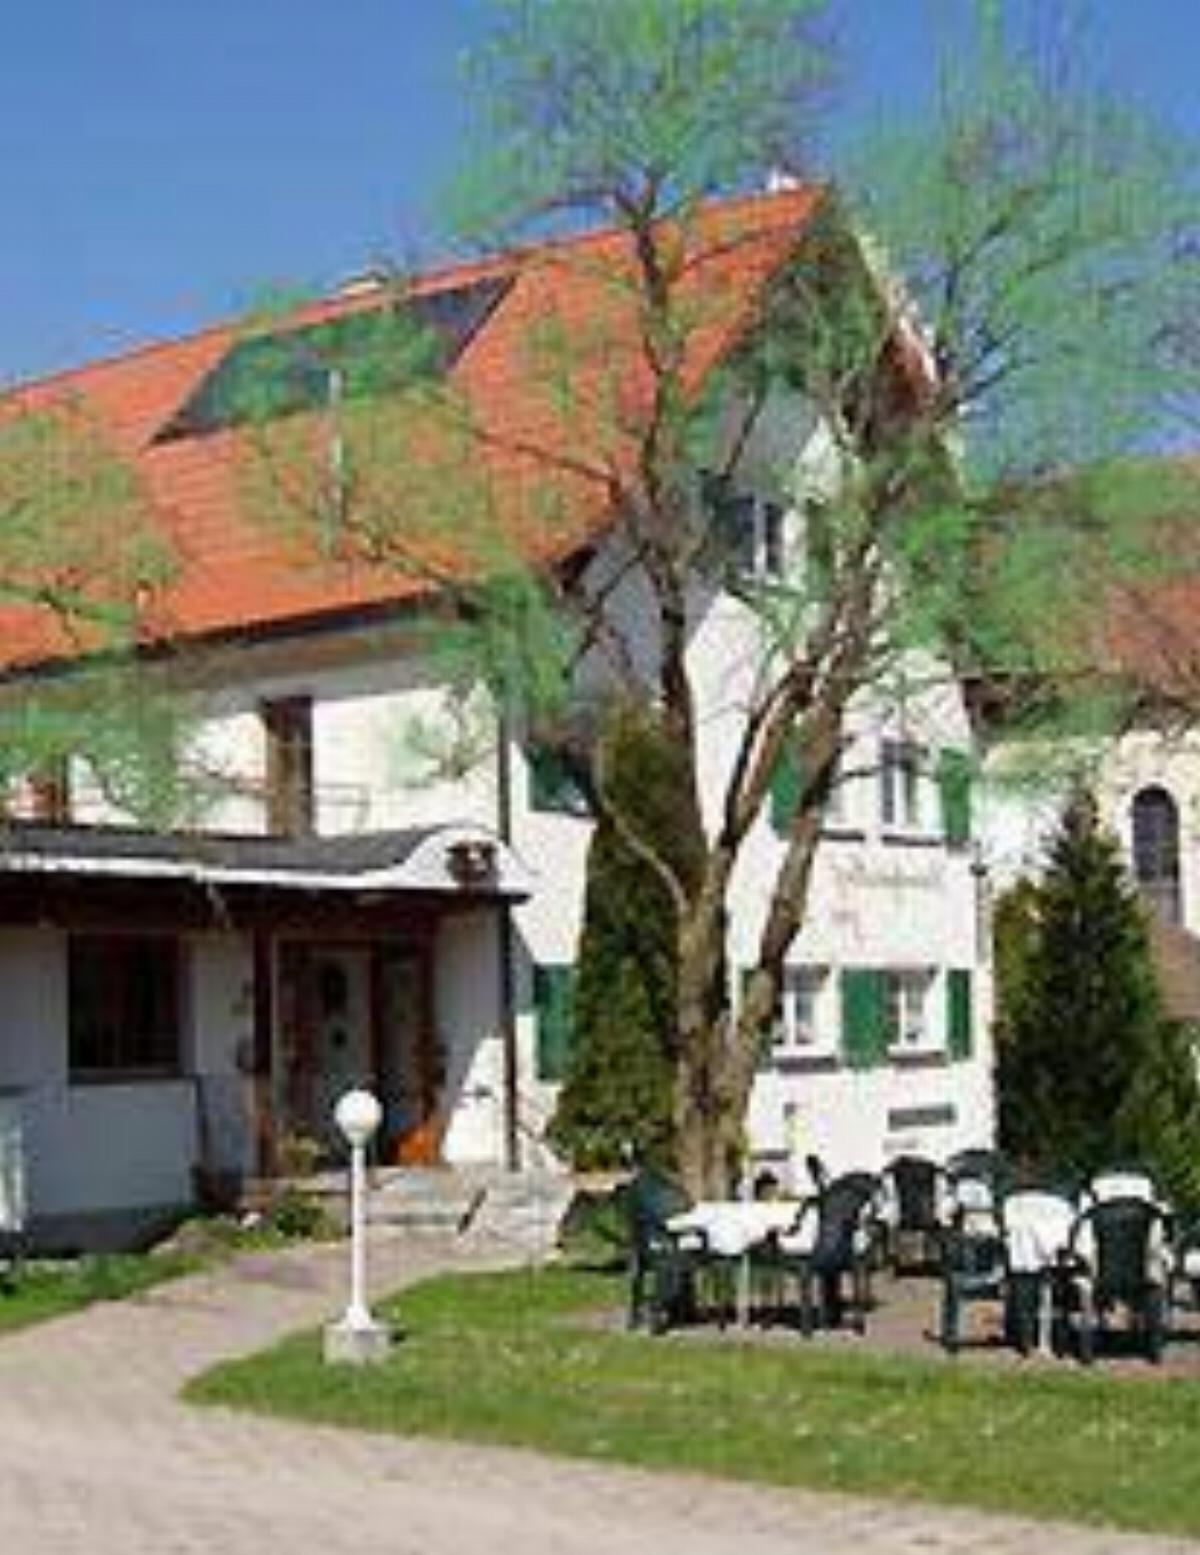 Landgasthof zur Post Hotel Heiligenberg Germany